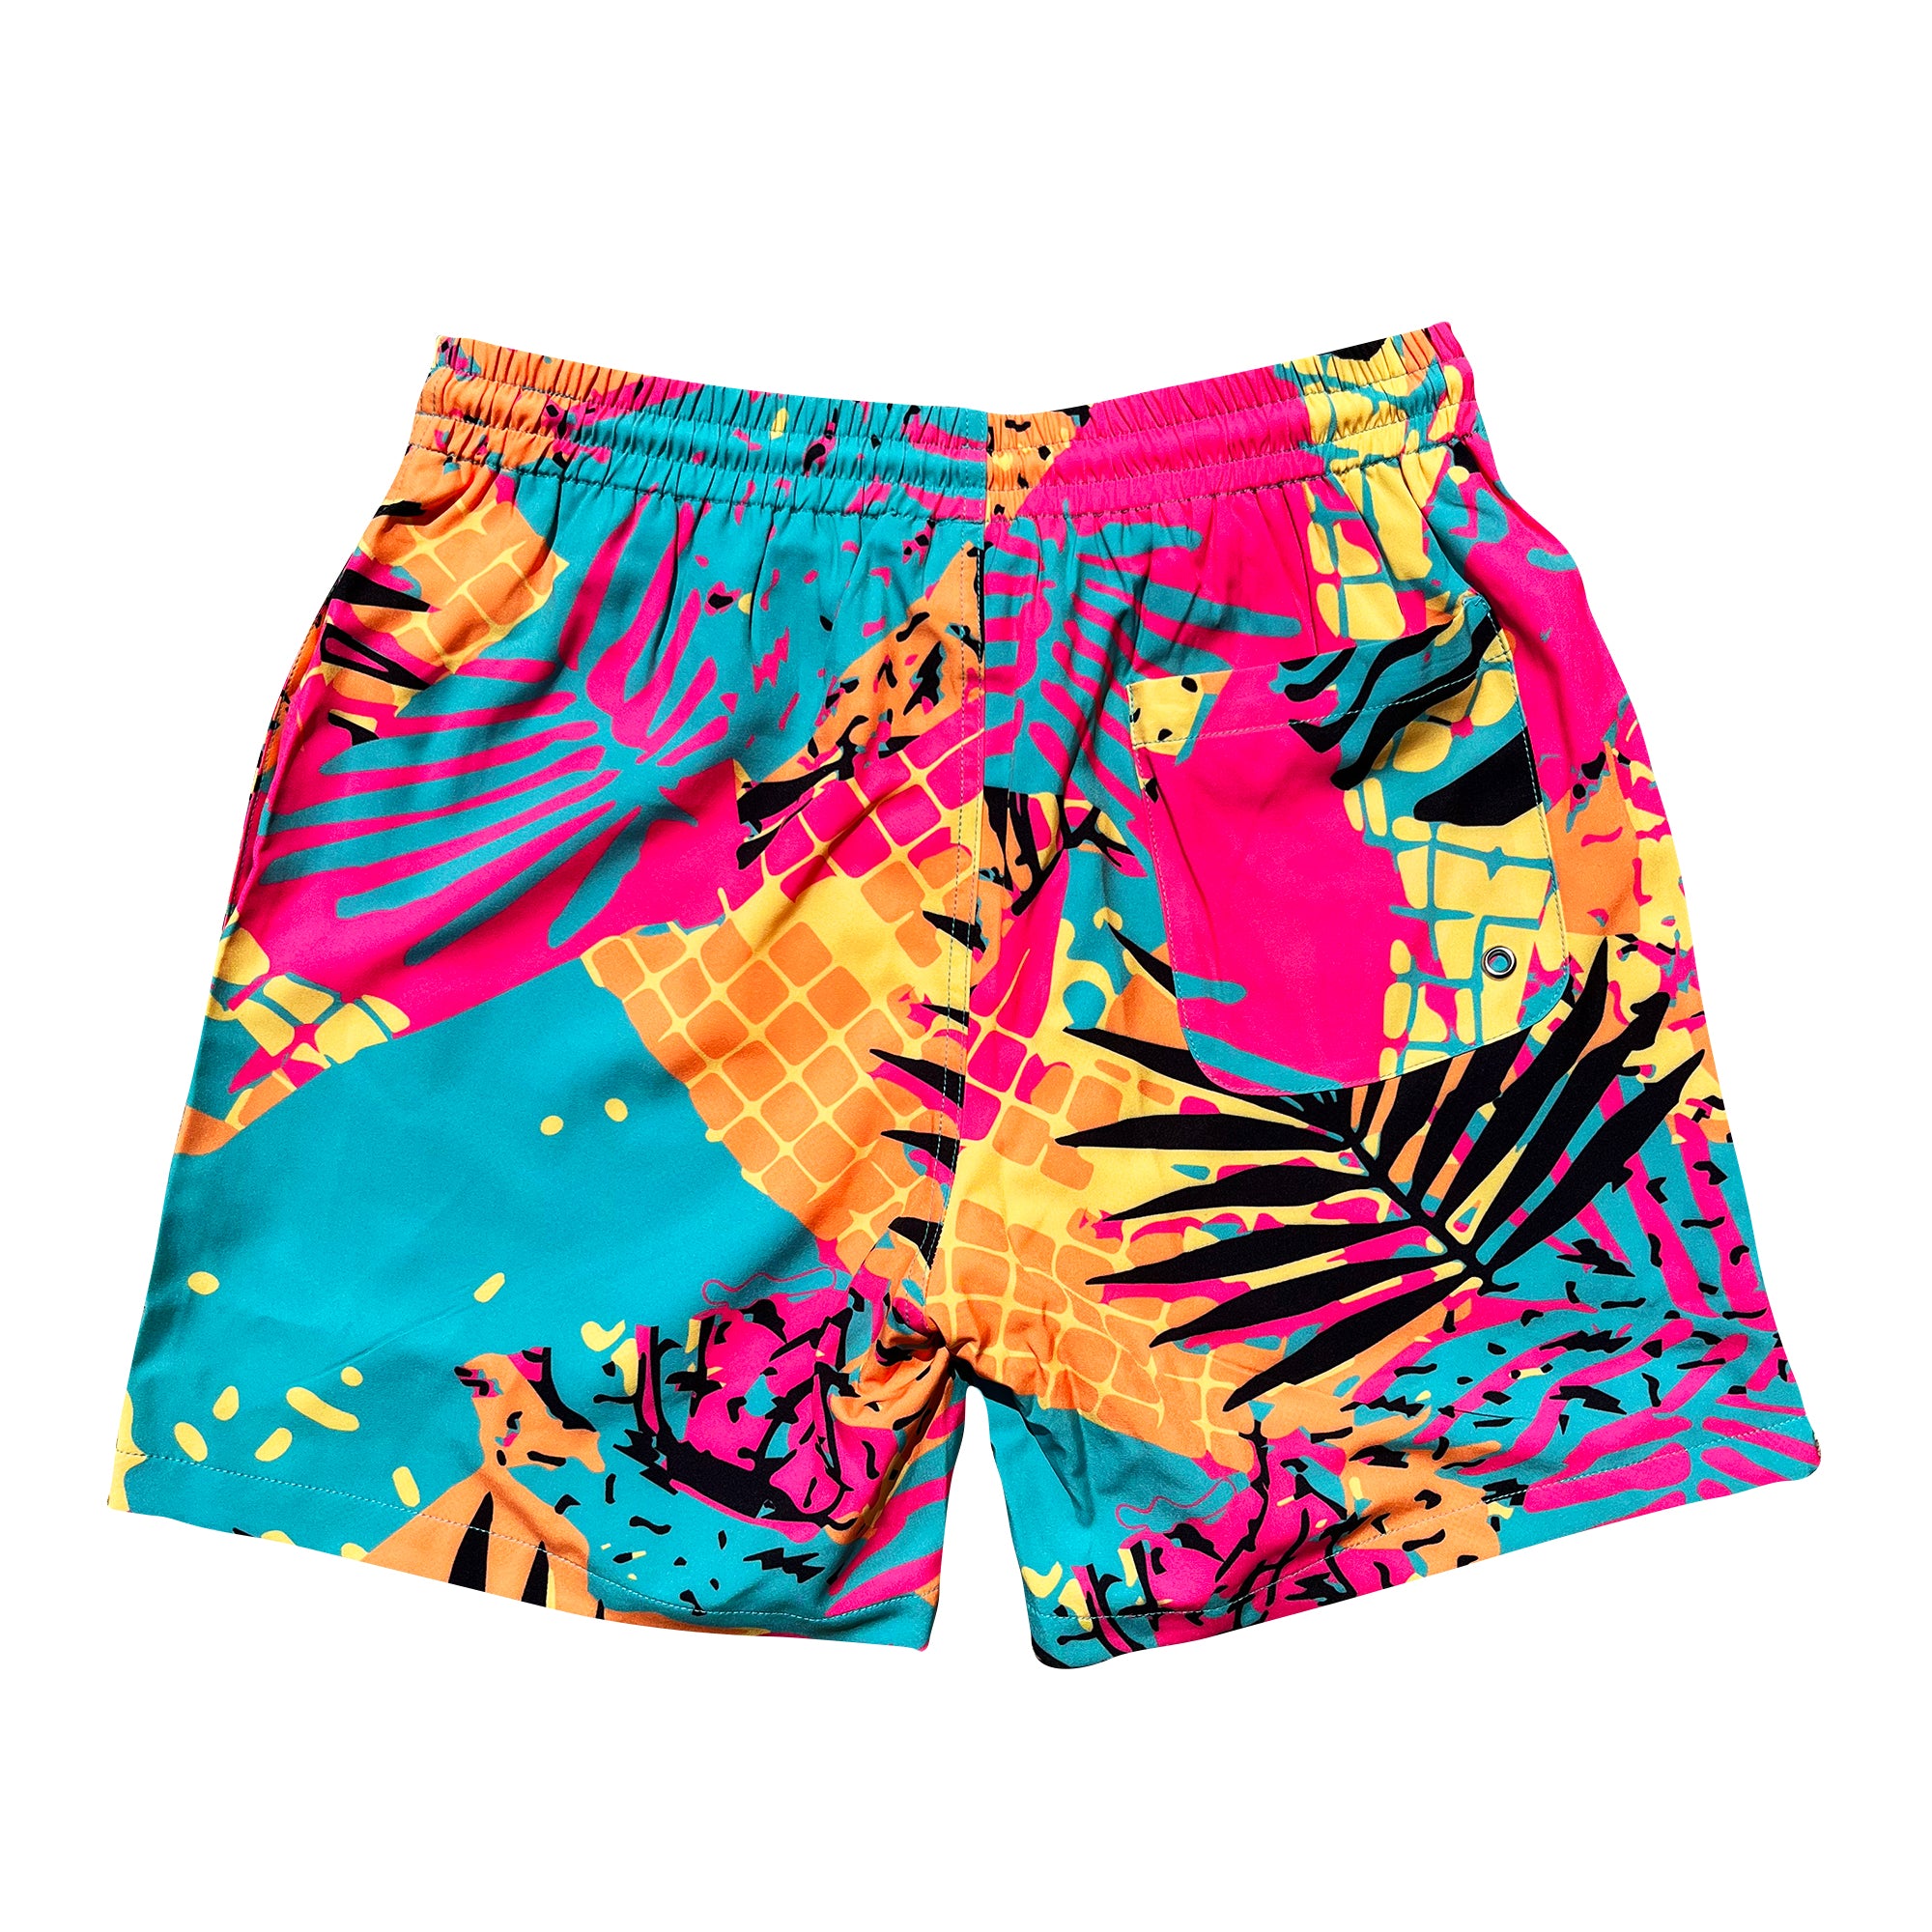 Summer Jam 80s Retro Swim Trunks Shorts - Fresh Prince inspired vintage retro shorts swimwear tropical beach red green orange yellow throwback old school design. B Fresh Gear.